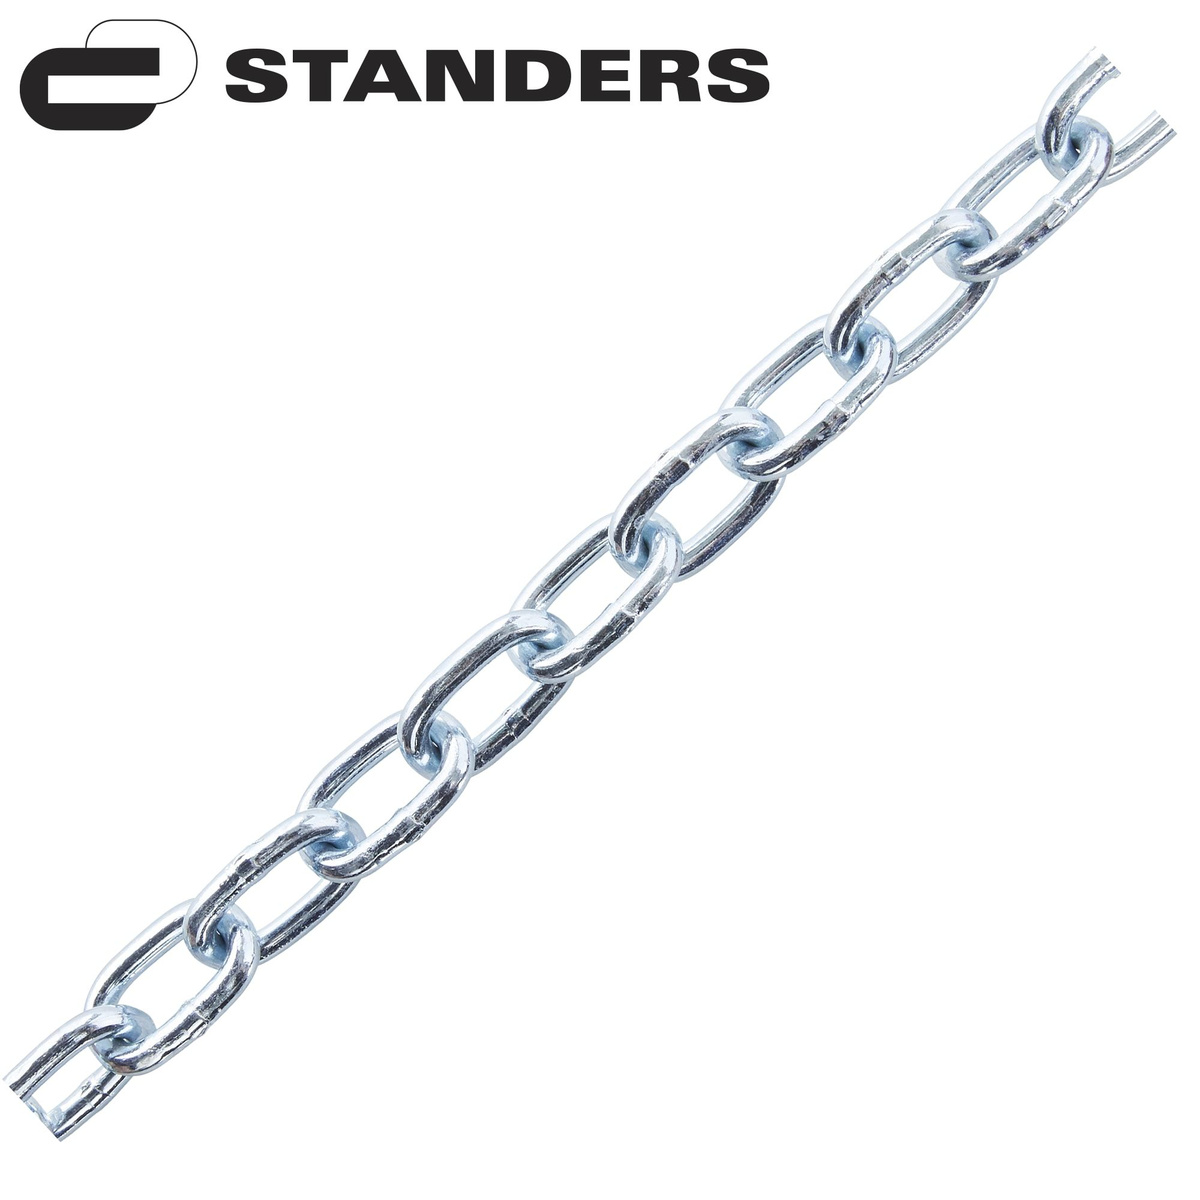 Цепь Standers оцинкованная сталь короткое звено 6 мм 5 м/уп.